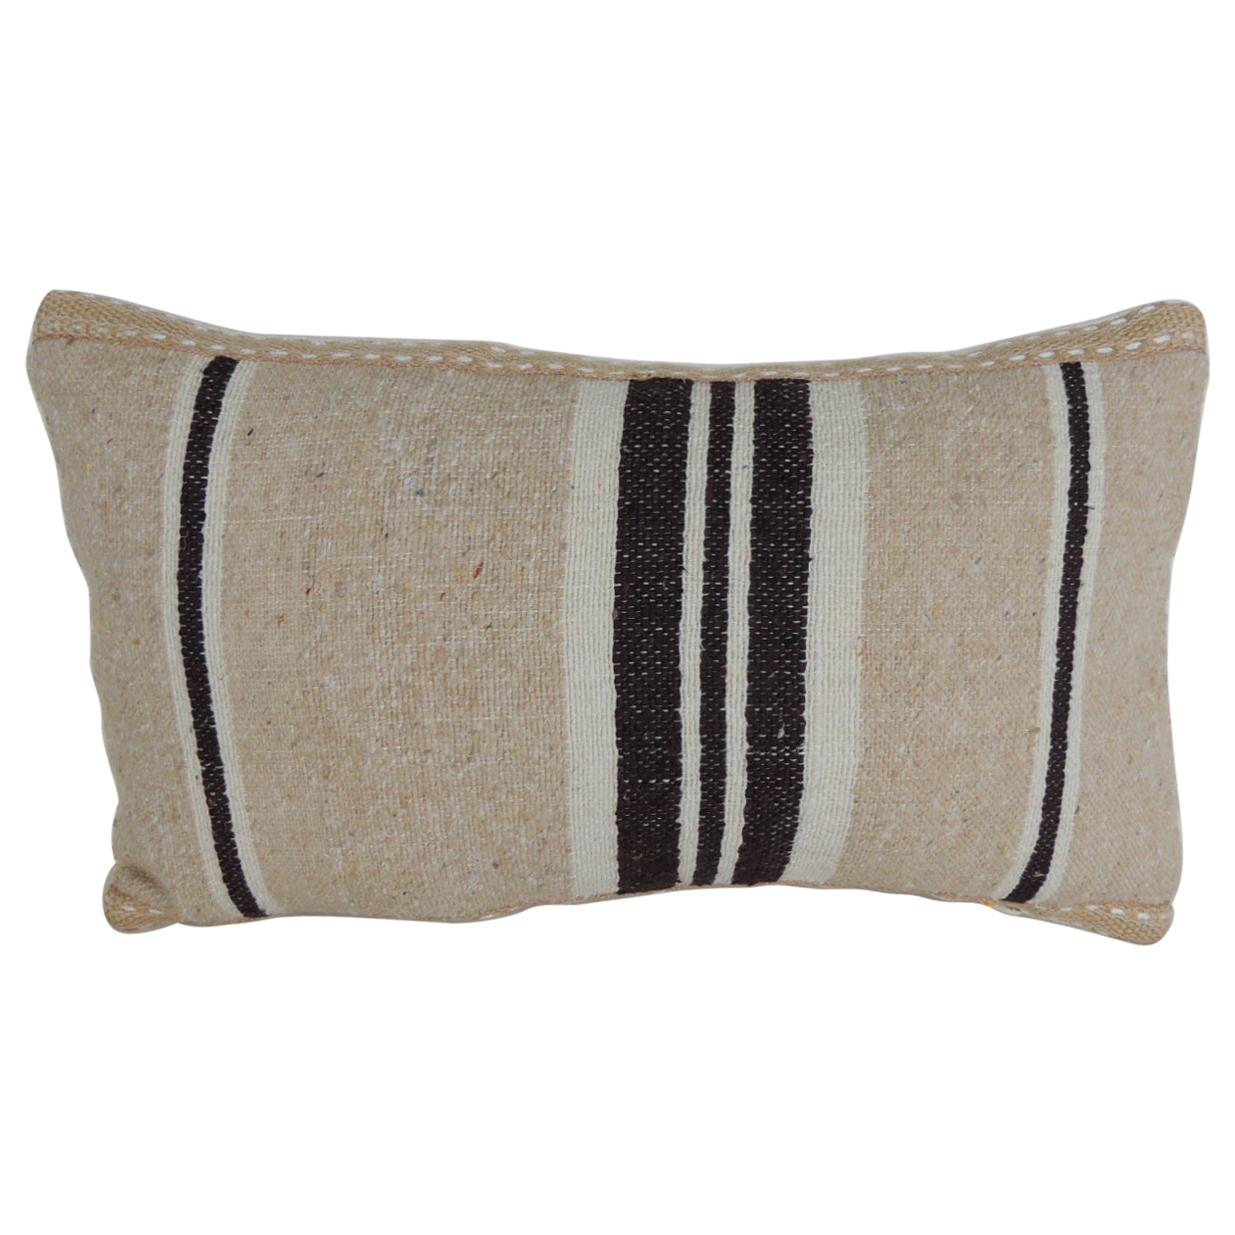 Vintage Woven Tribal Artisanal Textile Decorative Lumbar Pillow